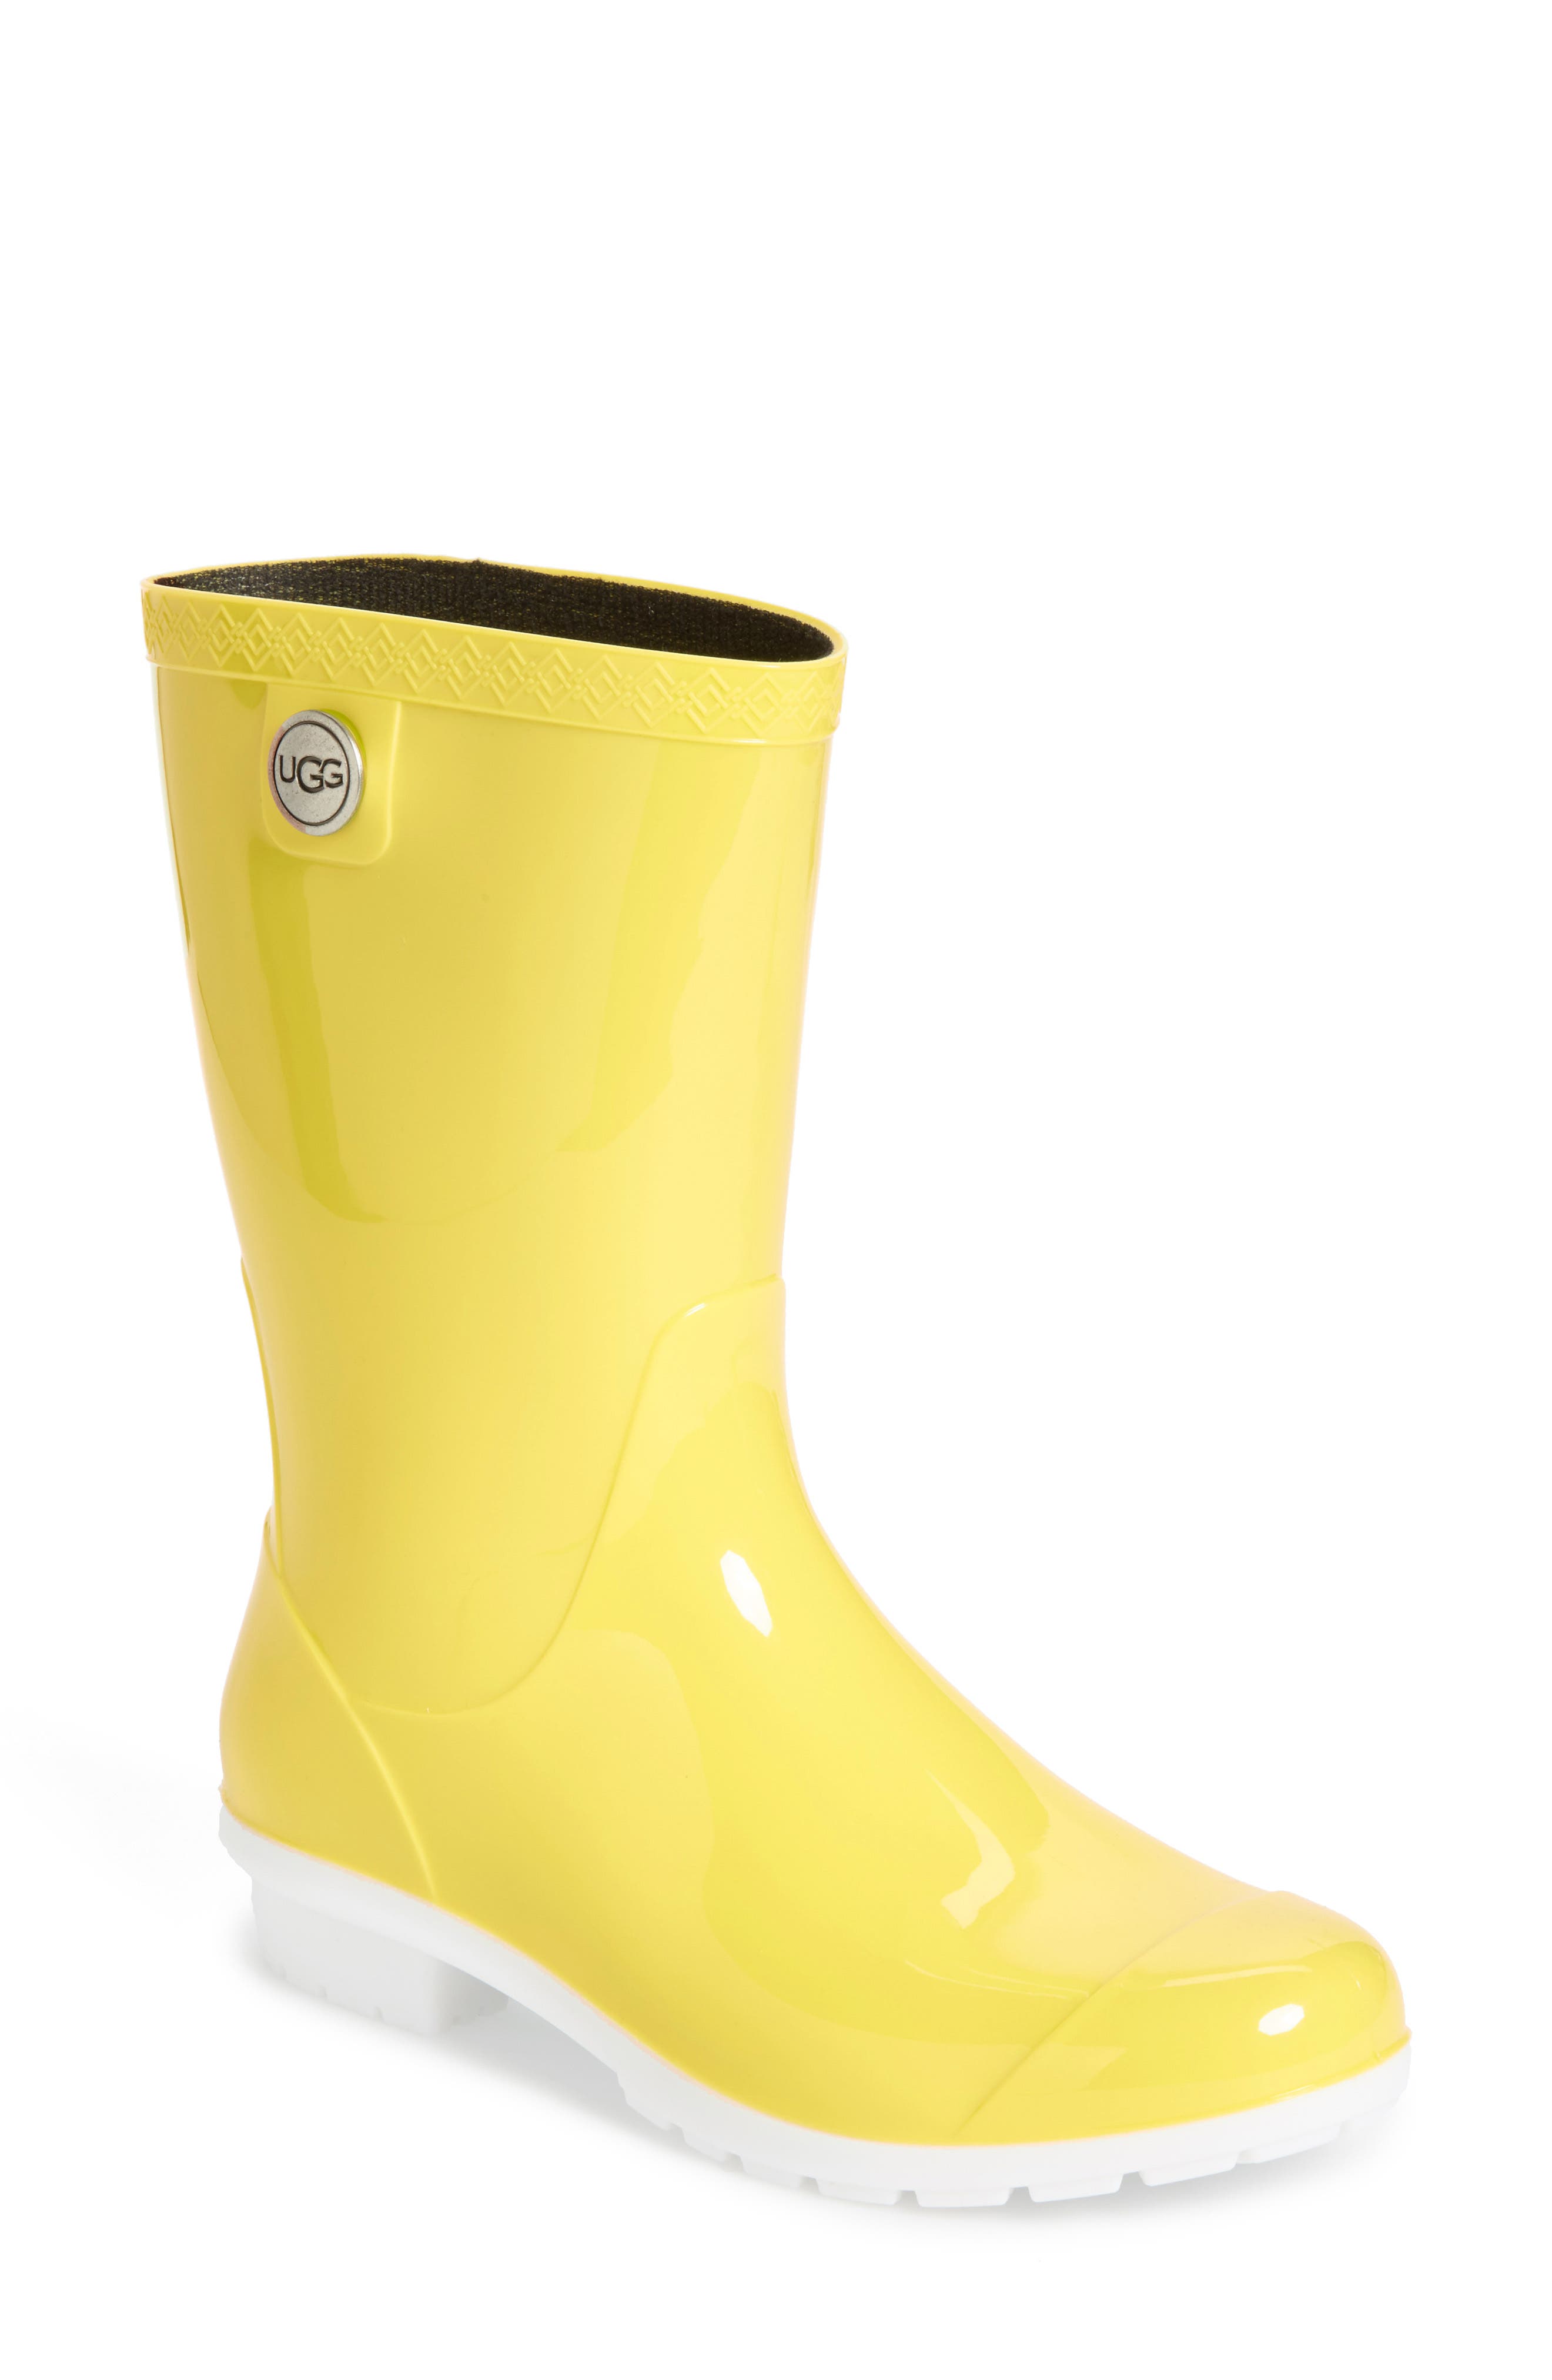 ugg rain boots yellow